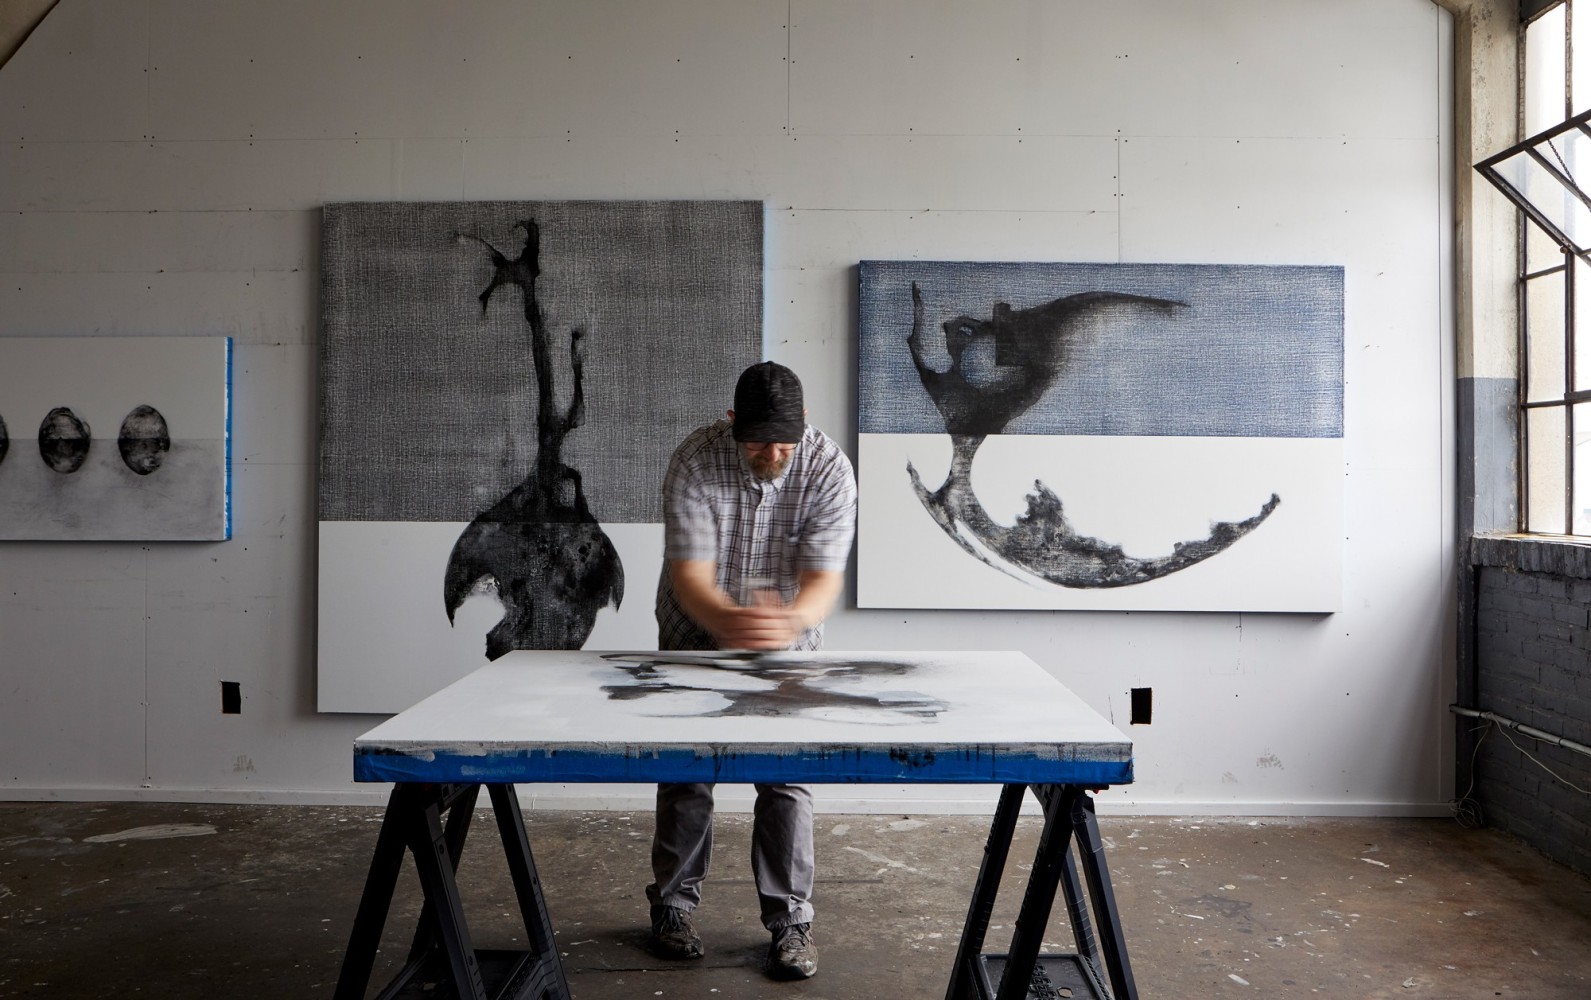 Andrew Wapinski at his studio
2022

&amp;nbsp;